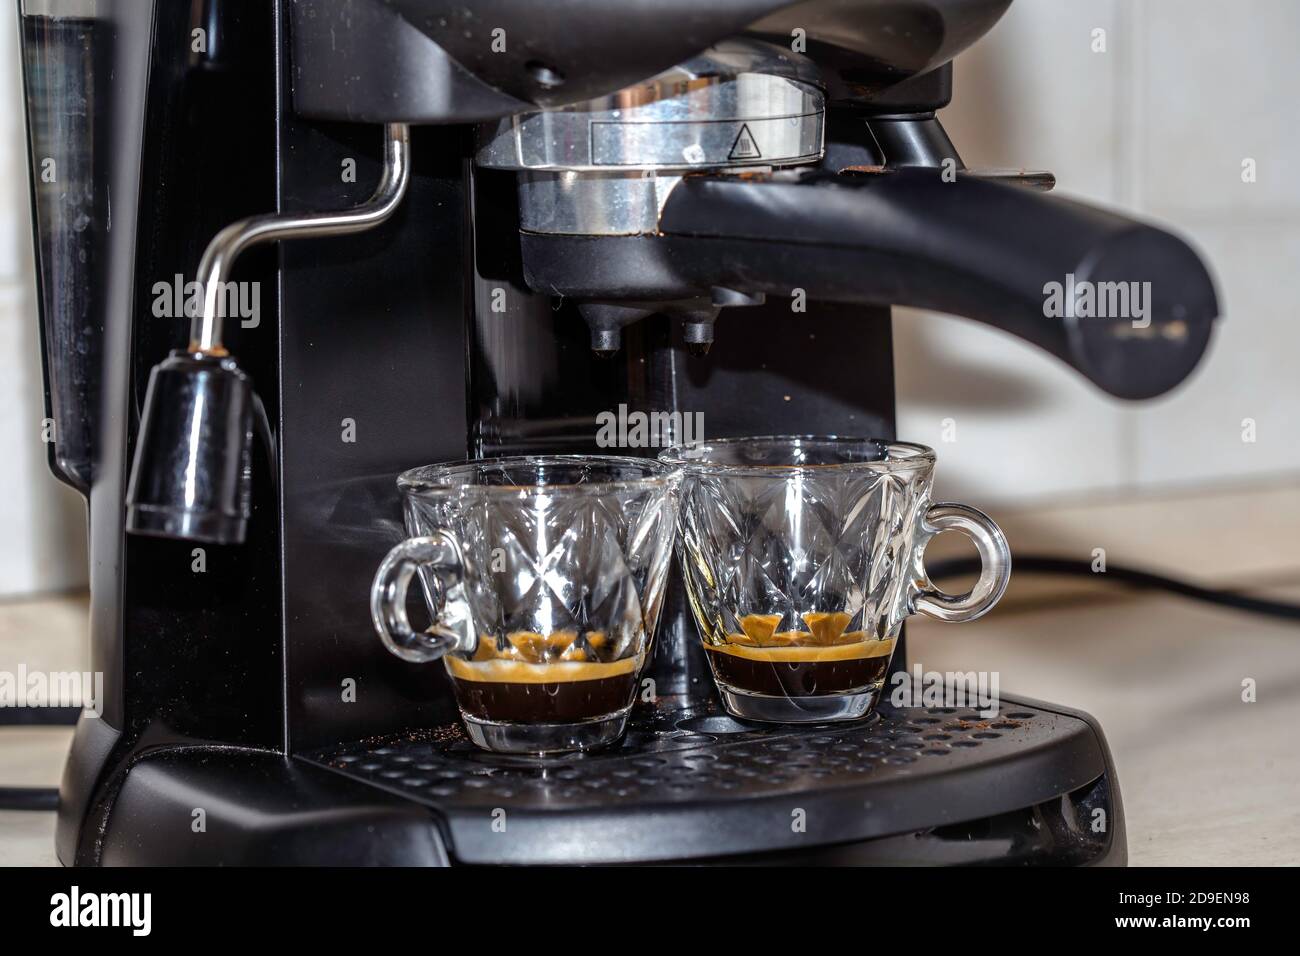 Process of making two espresso shots using espresso machine. Italian coffee. Stock Photo